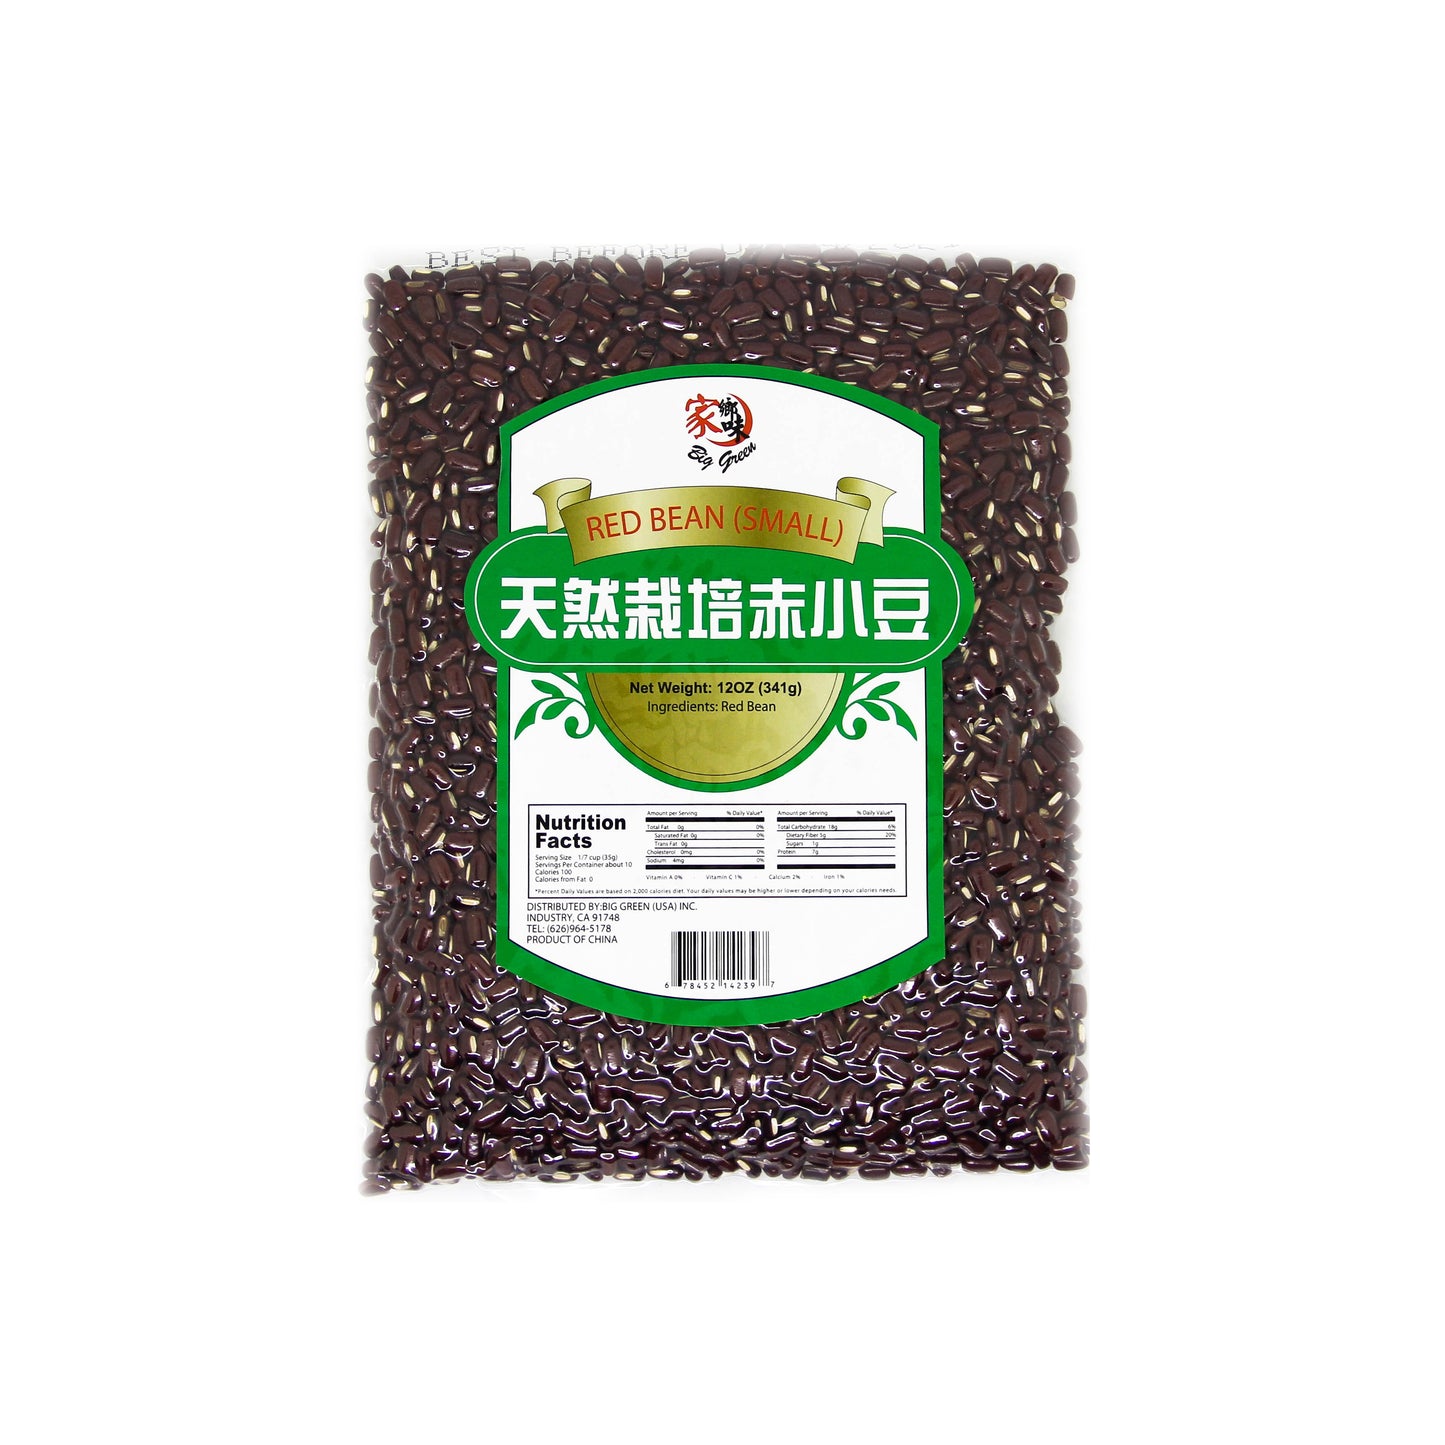 Red Bean (small) 家鄉味 天然栽培赤小豆